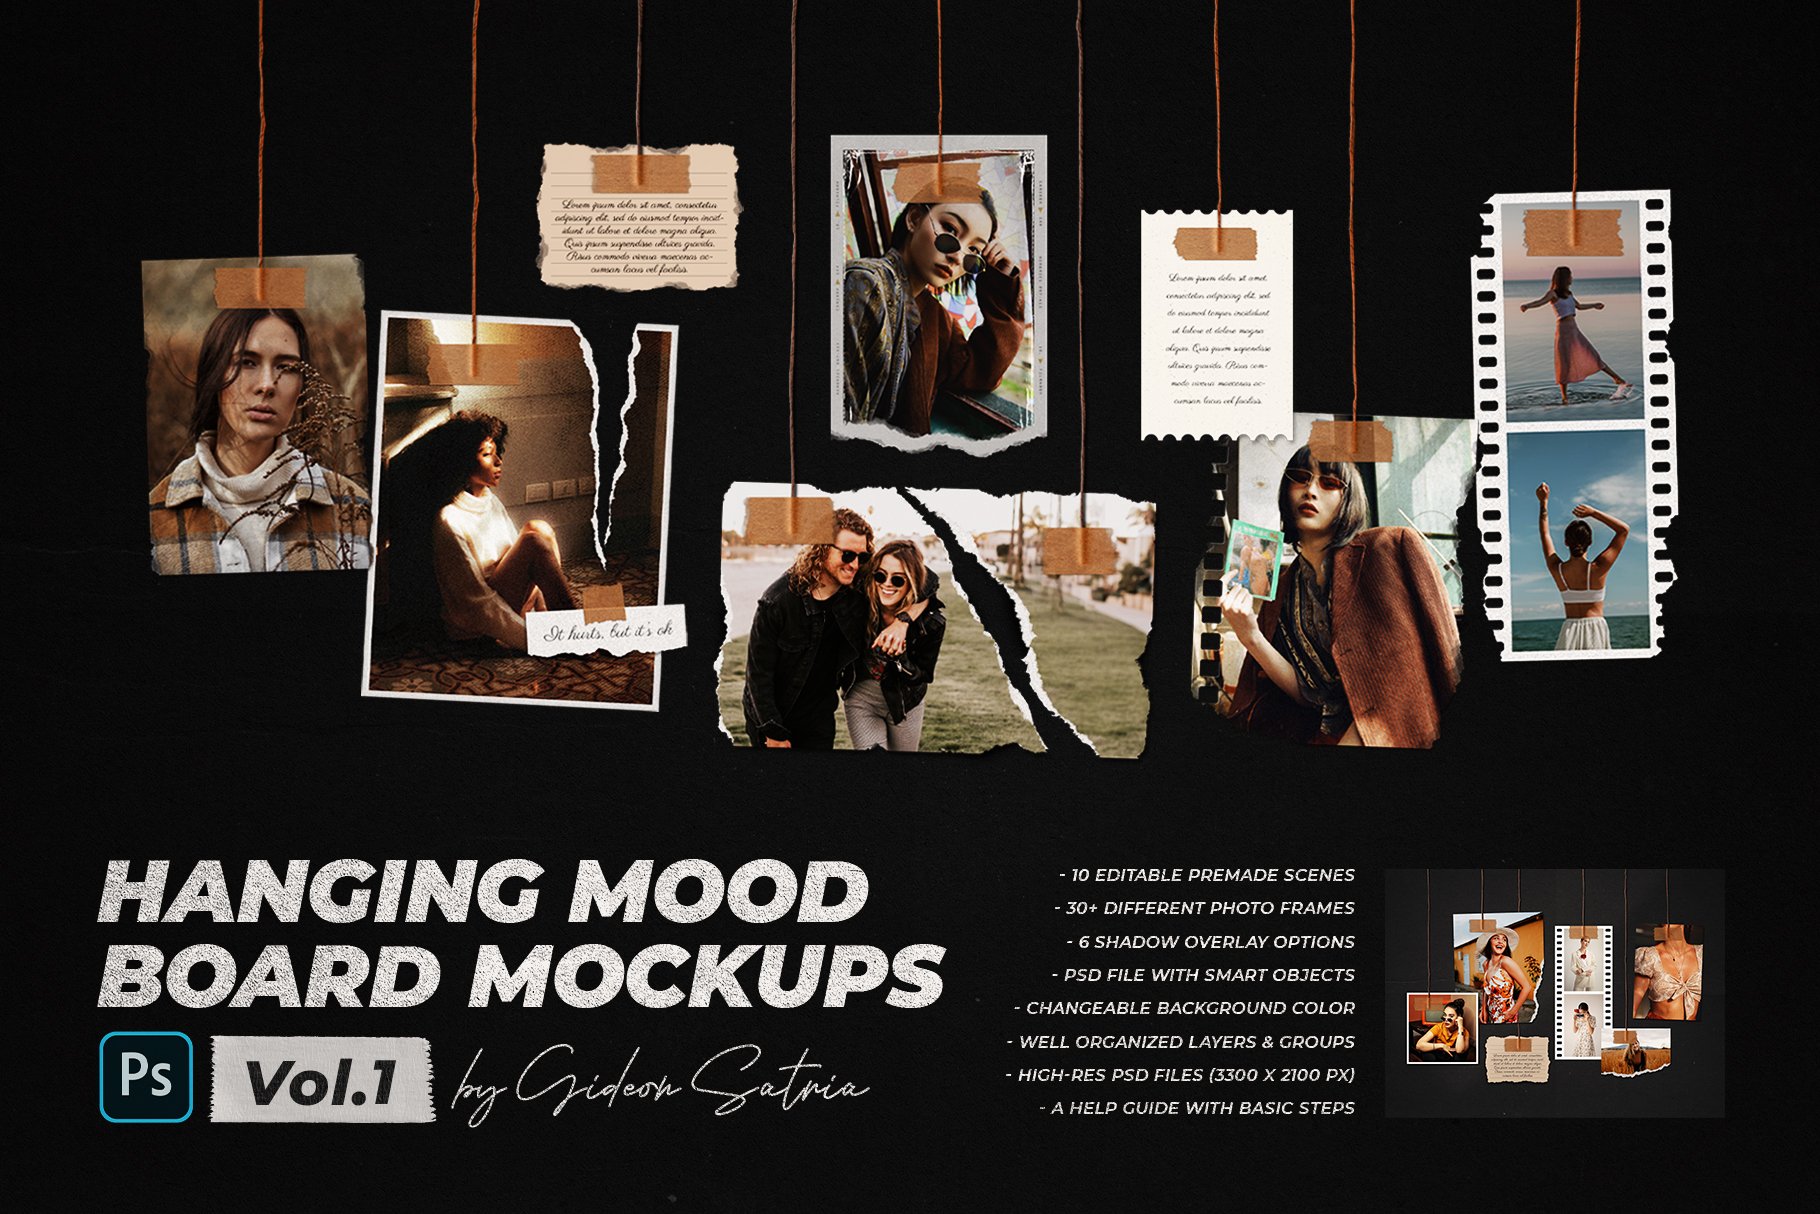 Hanging Mood Board Mockup Vol.1 cover image.